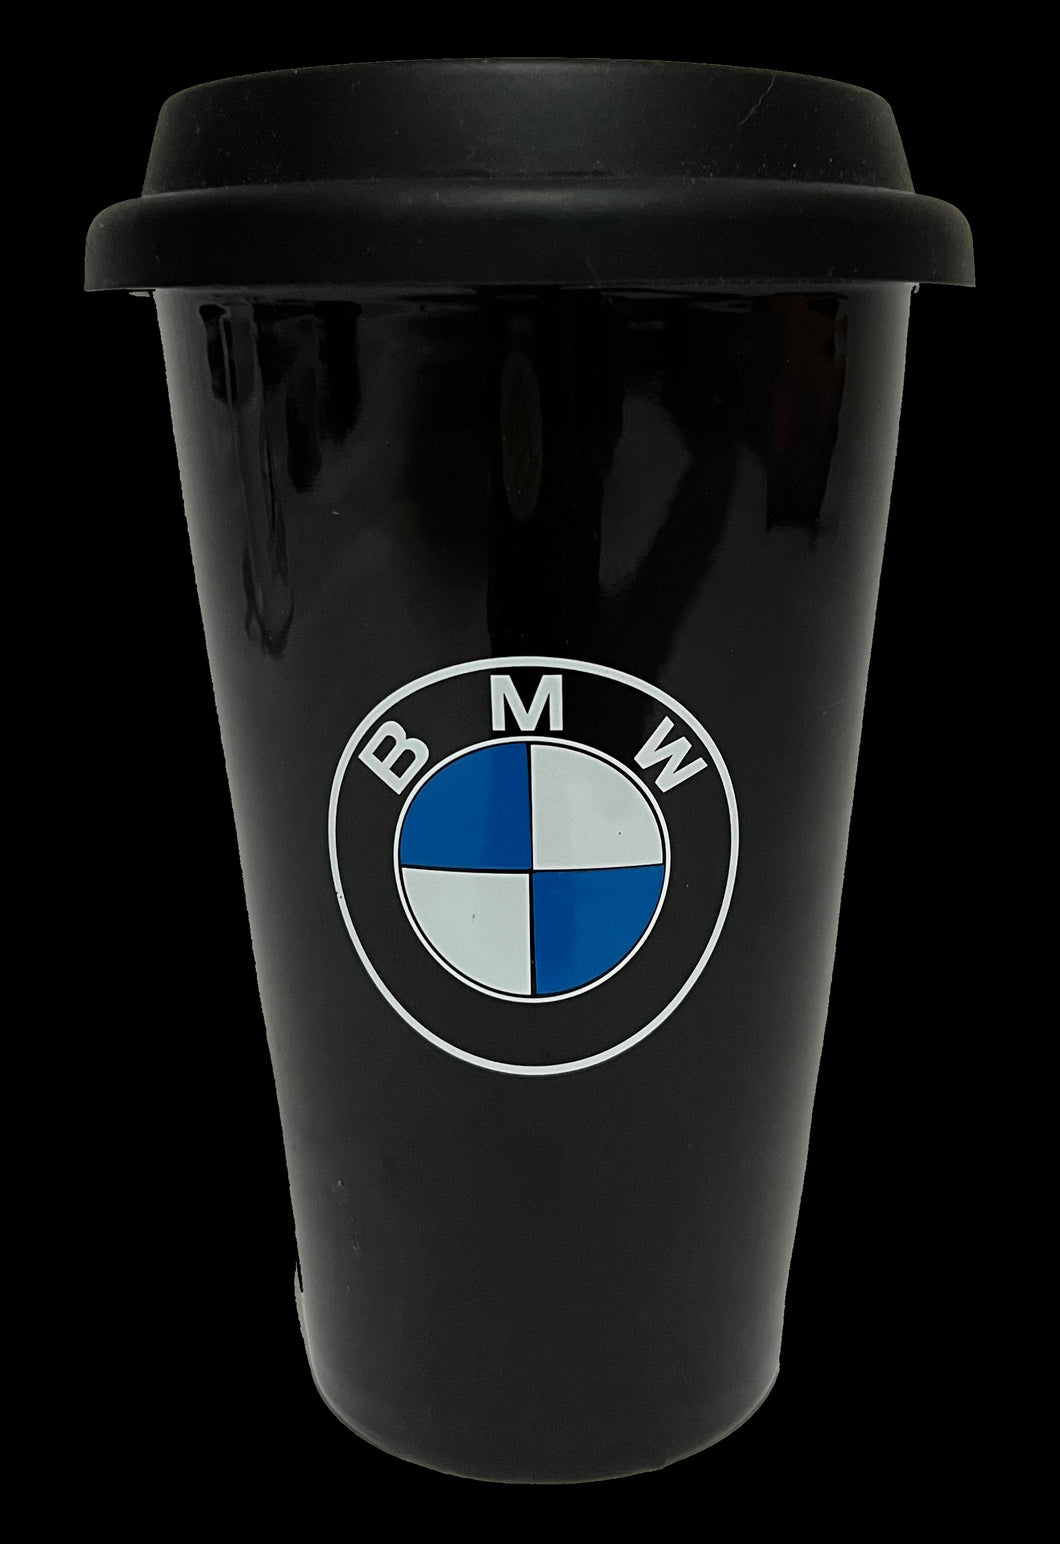 BMW Travel Mug 